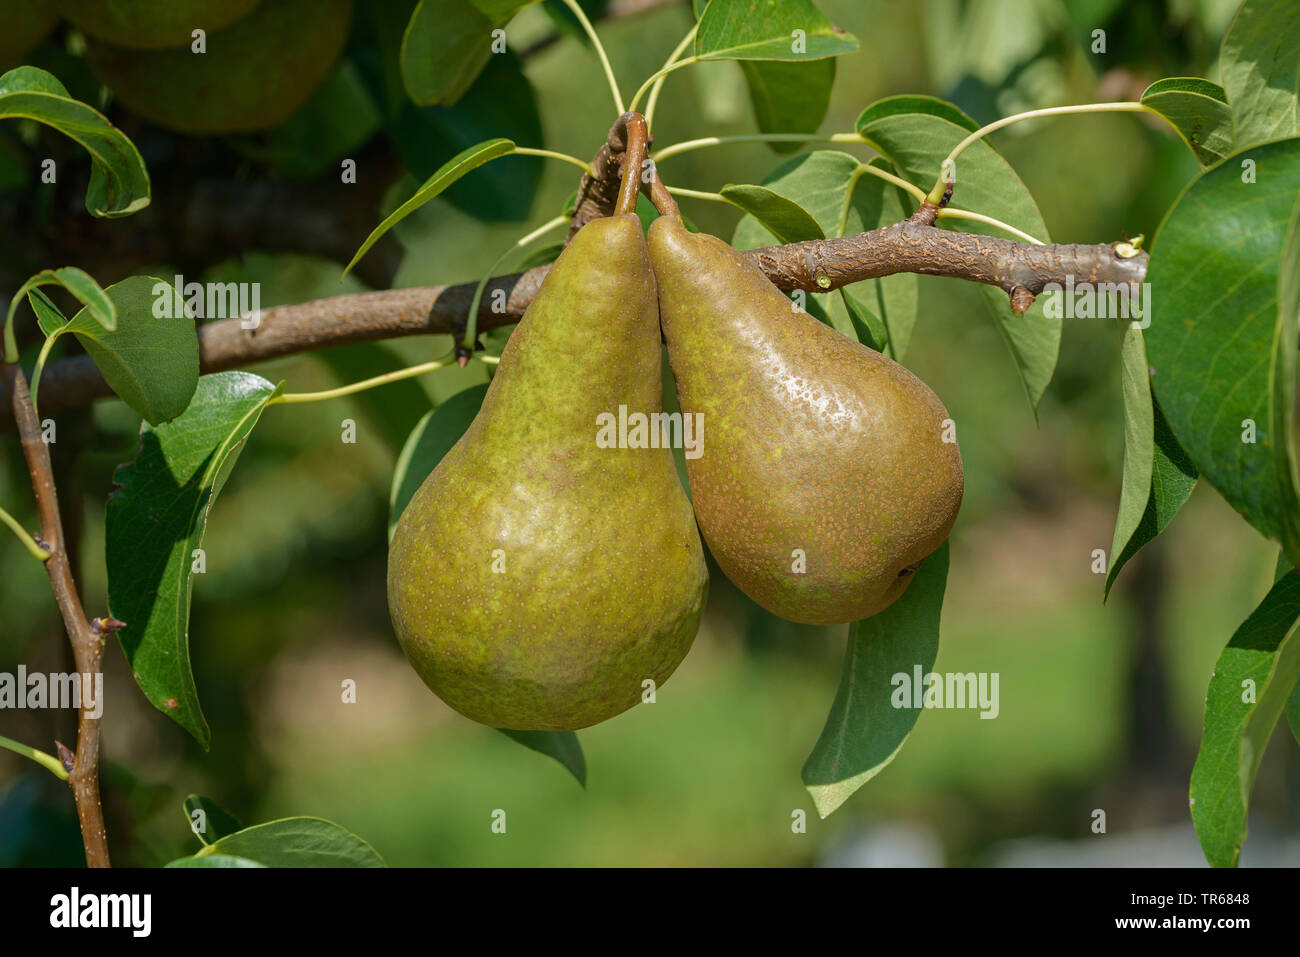 https://c8.alamy.com/comp/TR6848/common-pear-pyrus-communis-boscs-flaschenbirne-pyrus-communis-boscs-flaschenbirne-pears-on-a-tree-cultivar-boscs-flaschenbirne-TR6848.jpg